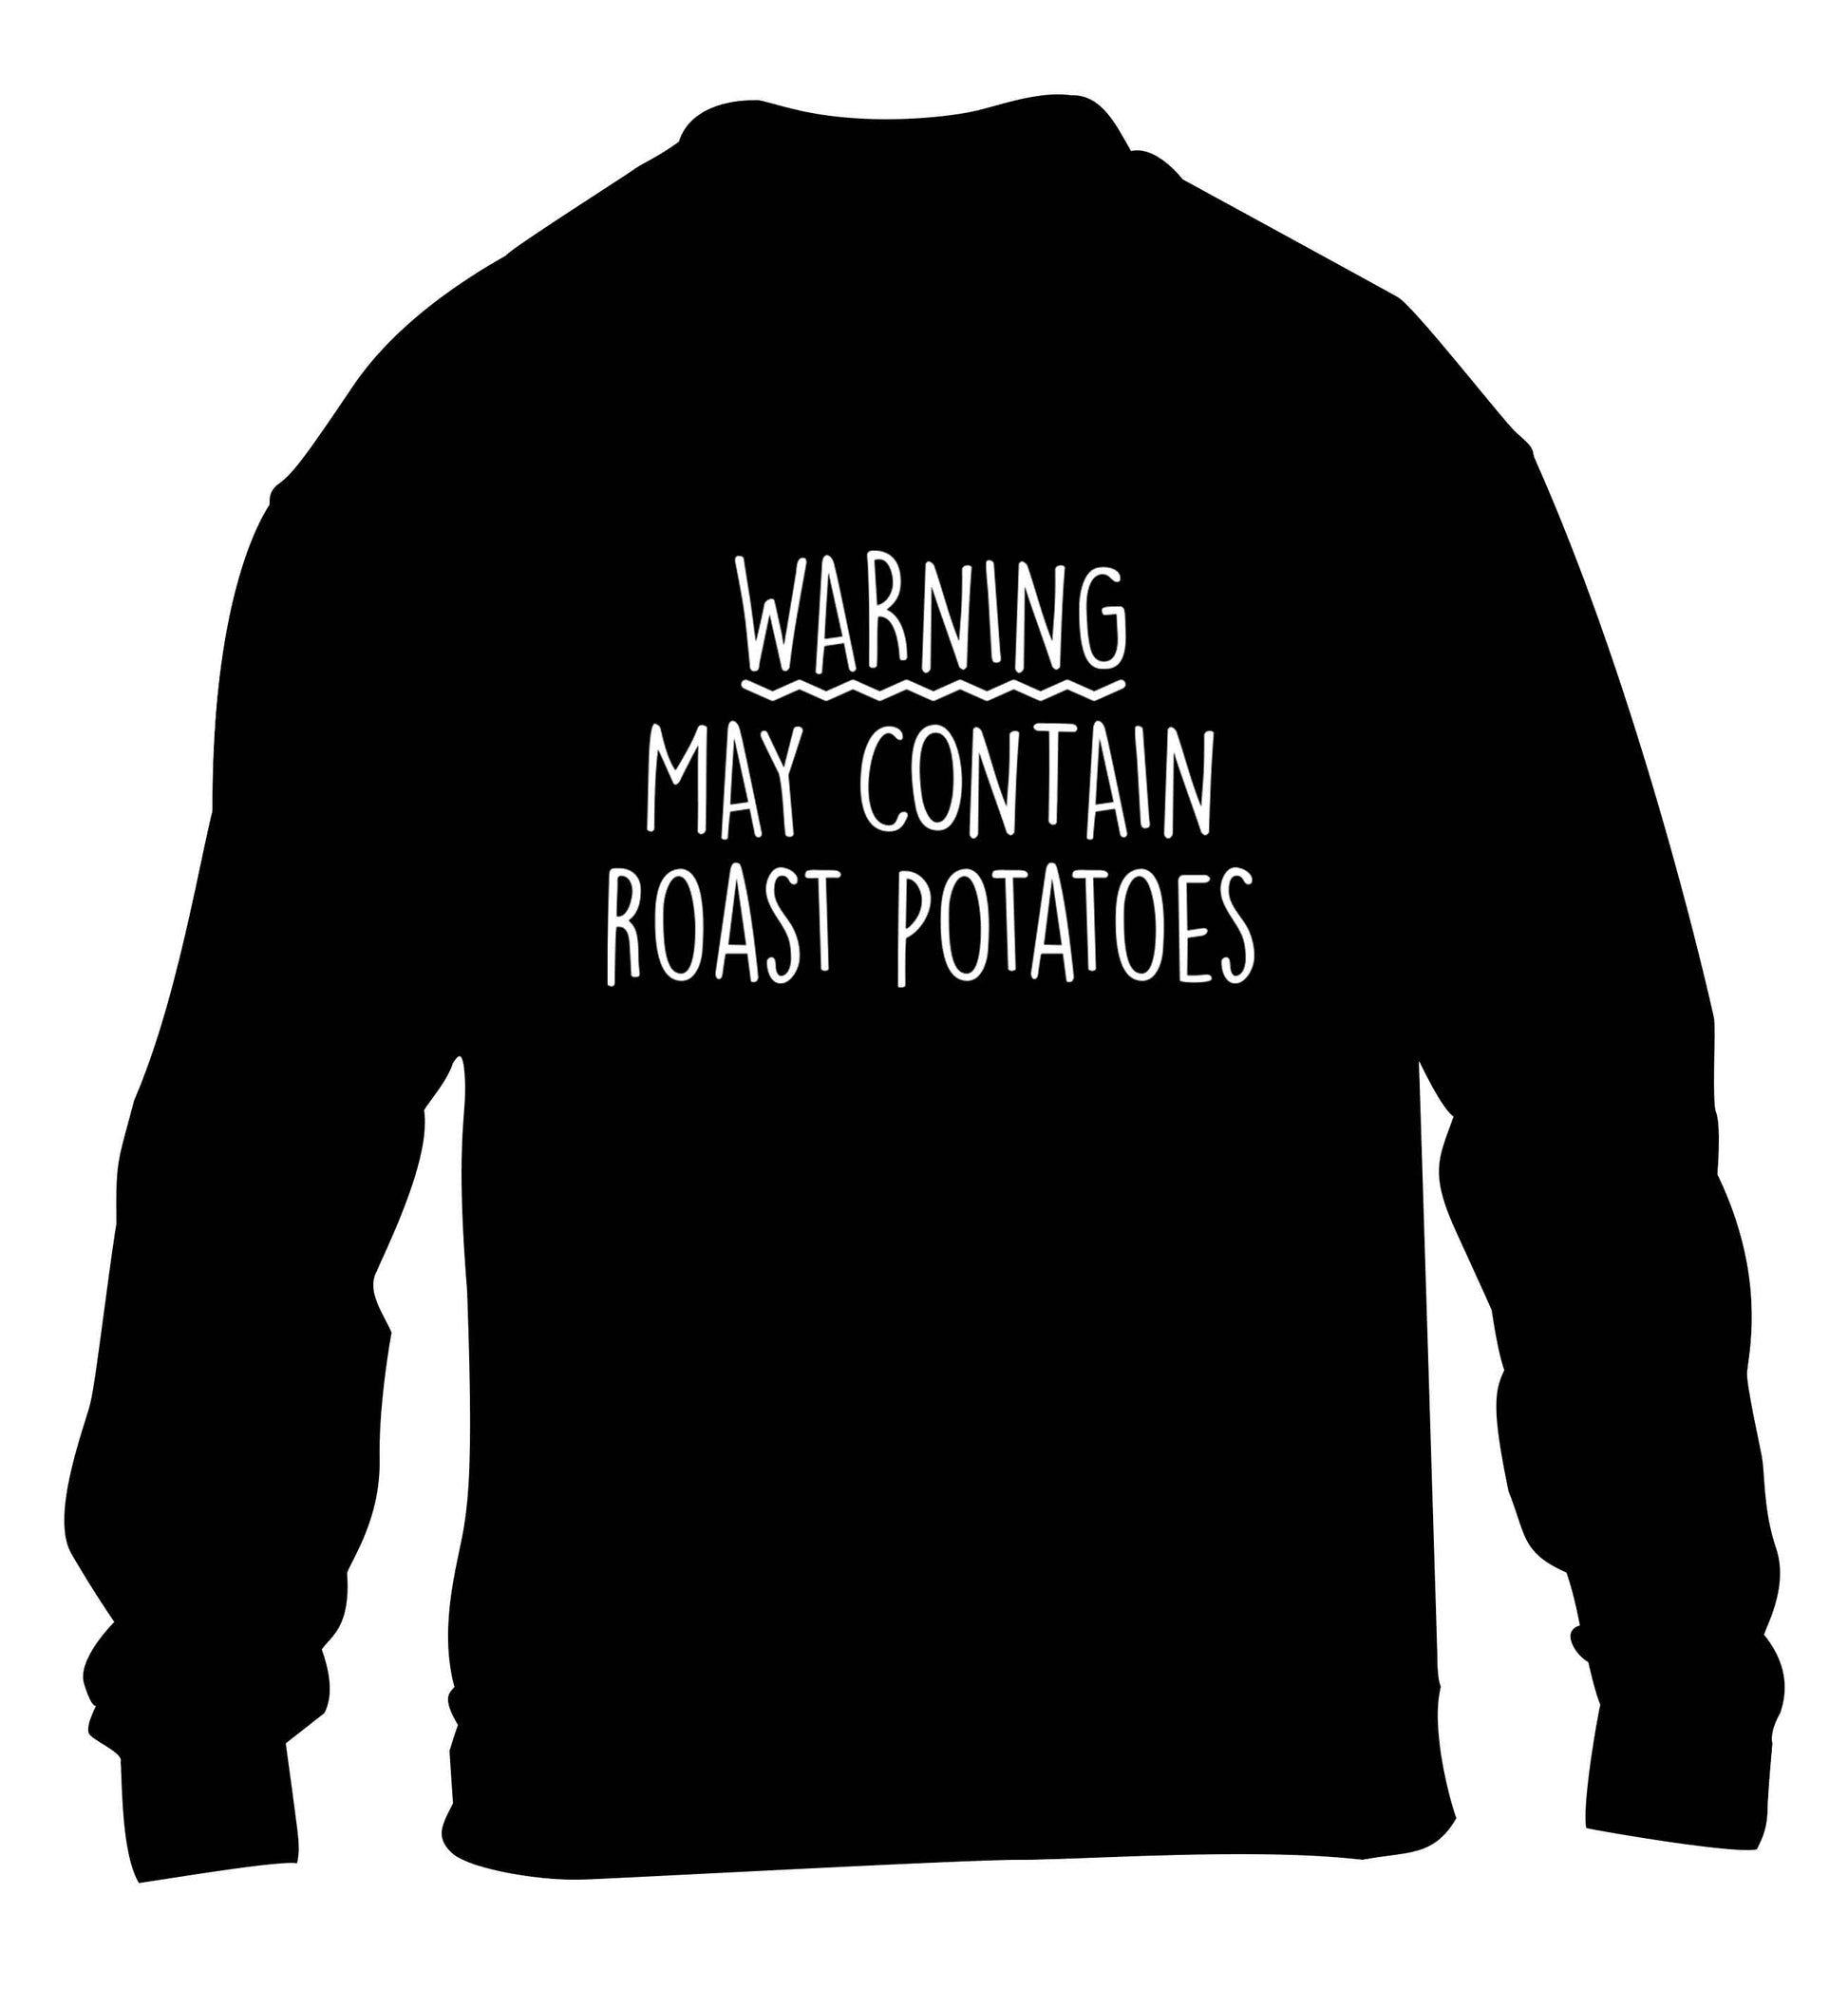 Warning may containg roast potatoes children's black sweater 12-13 Years